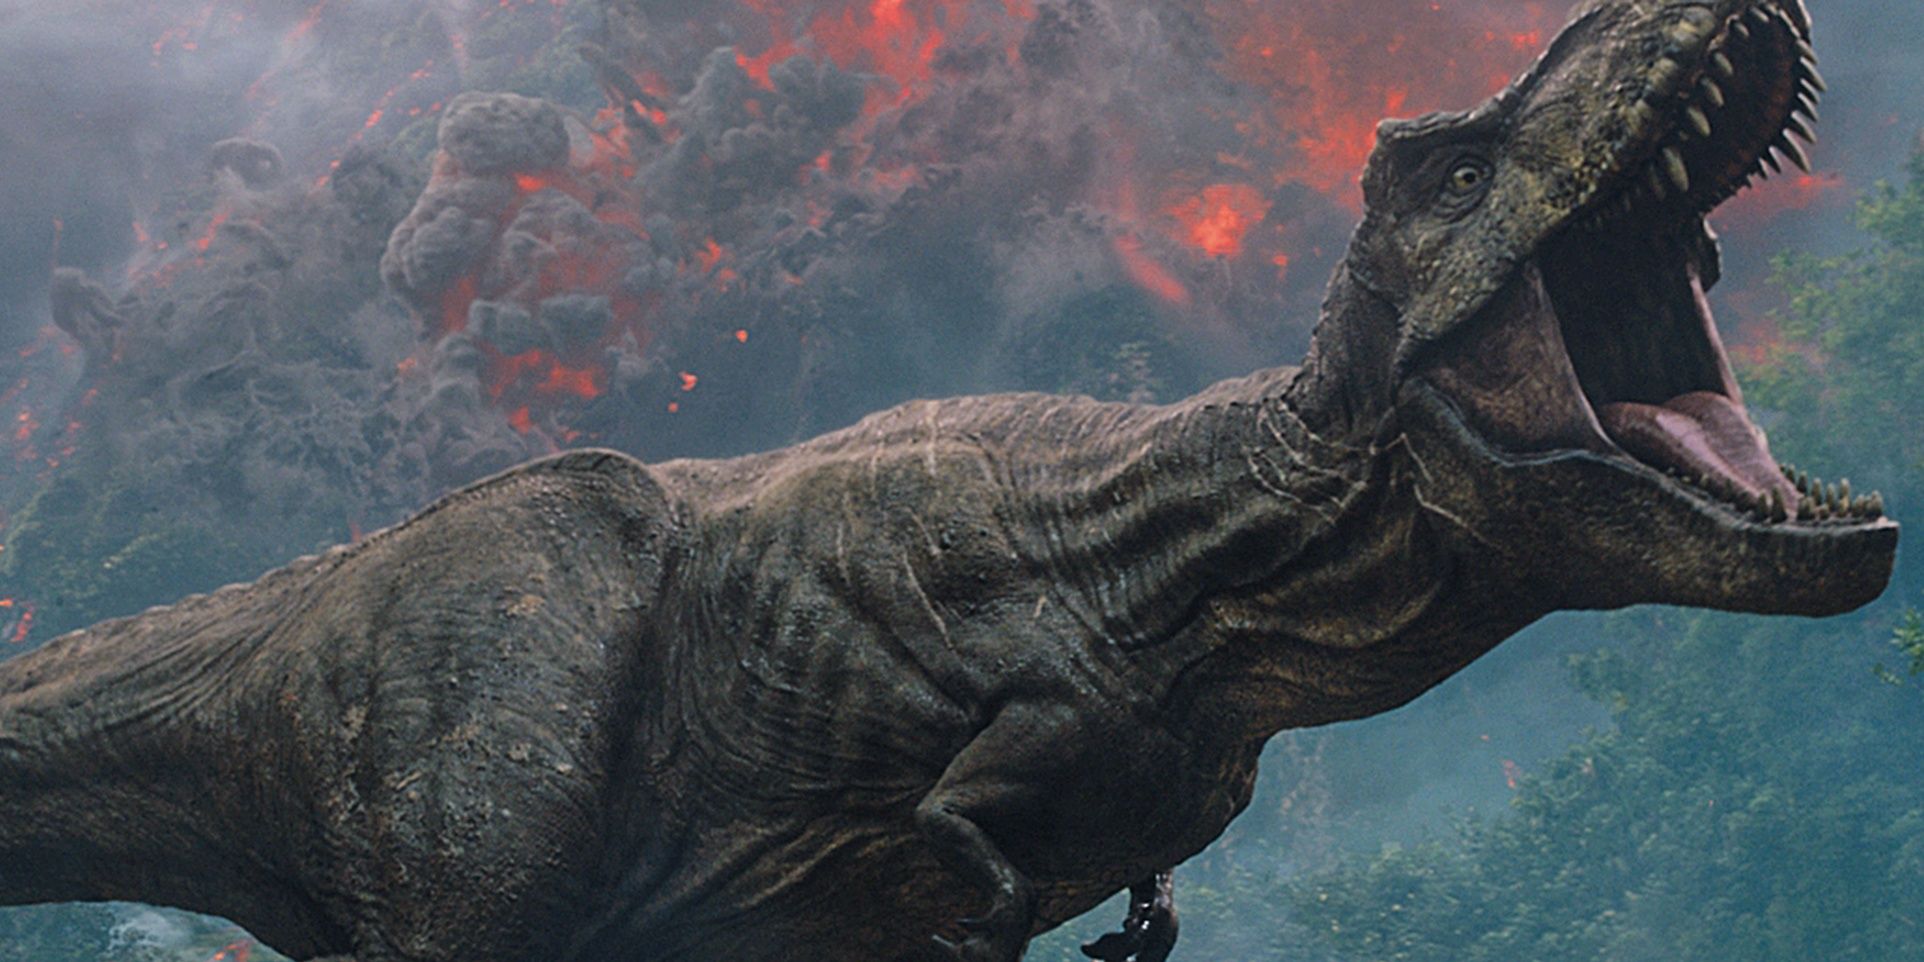 Jurassic World poster showing T-Rex